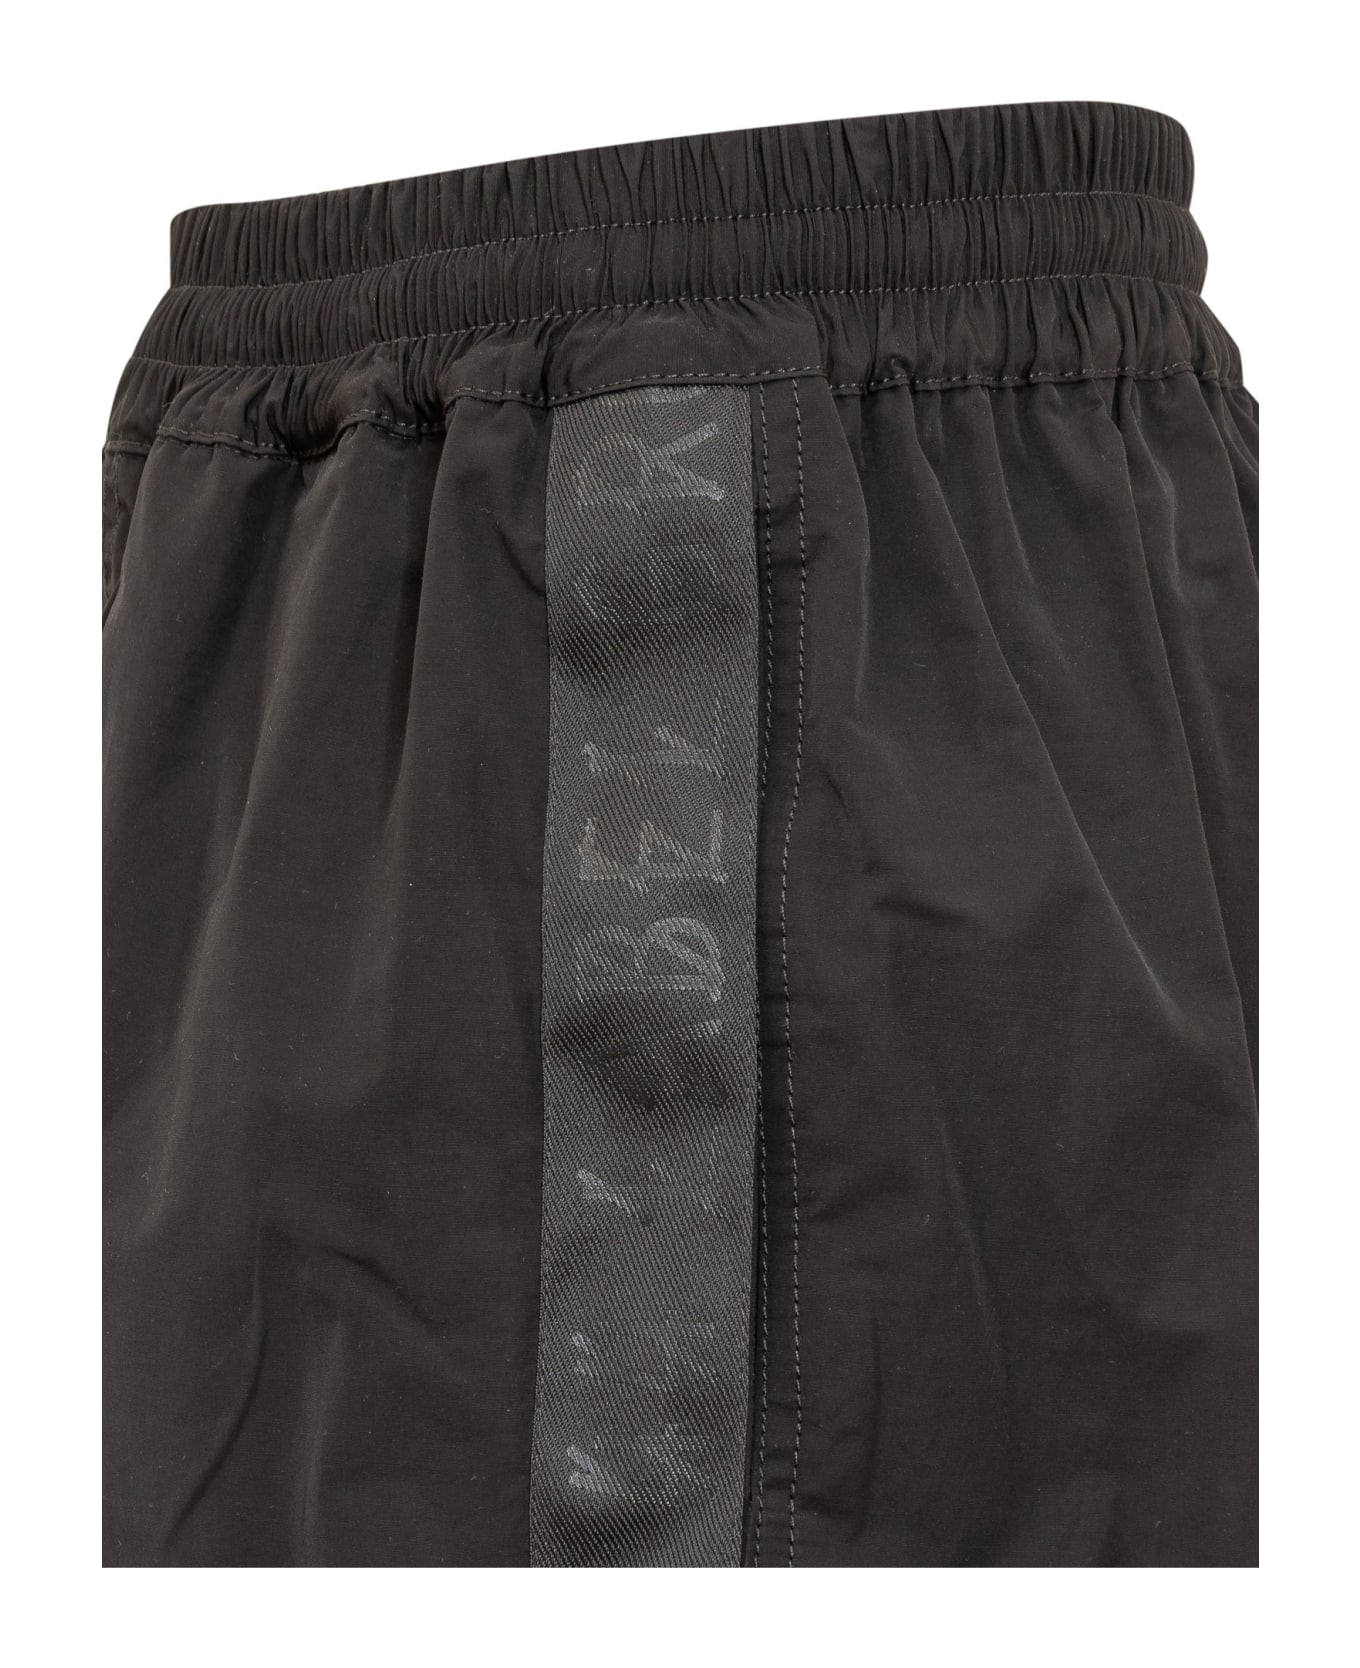 44 Label Group Drawsting Shorts - BLACK ショートパンツ